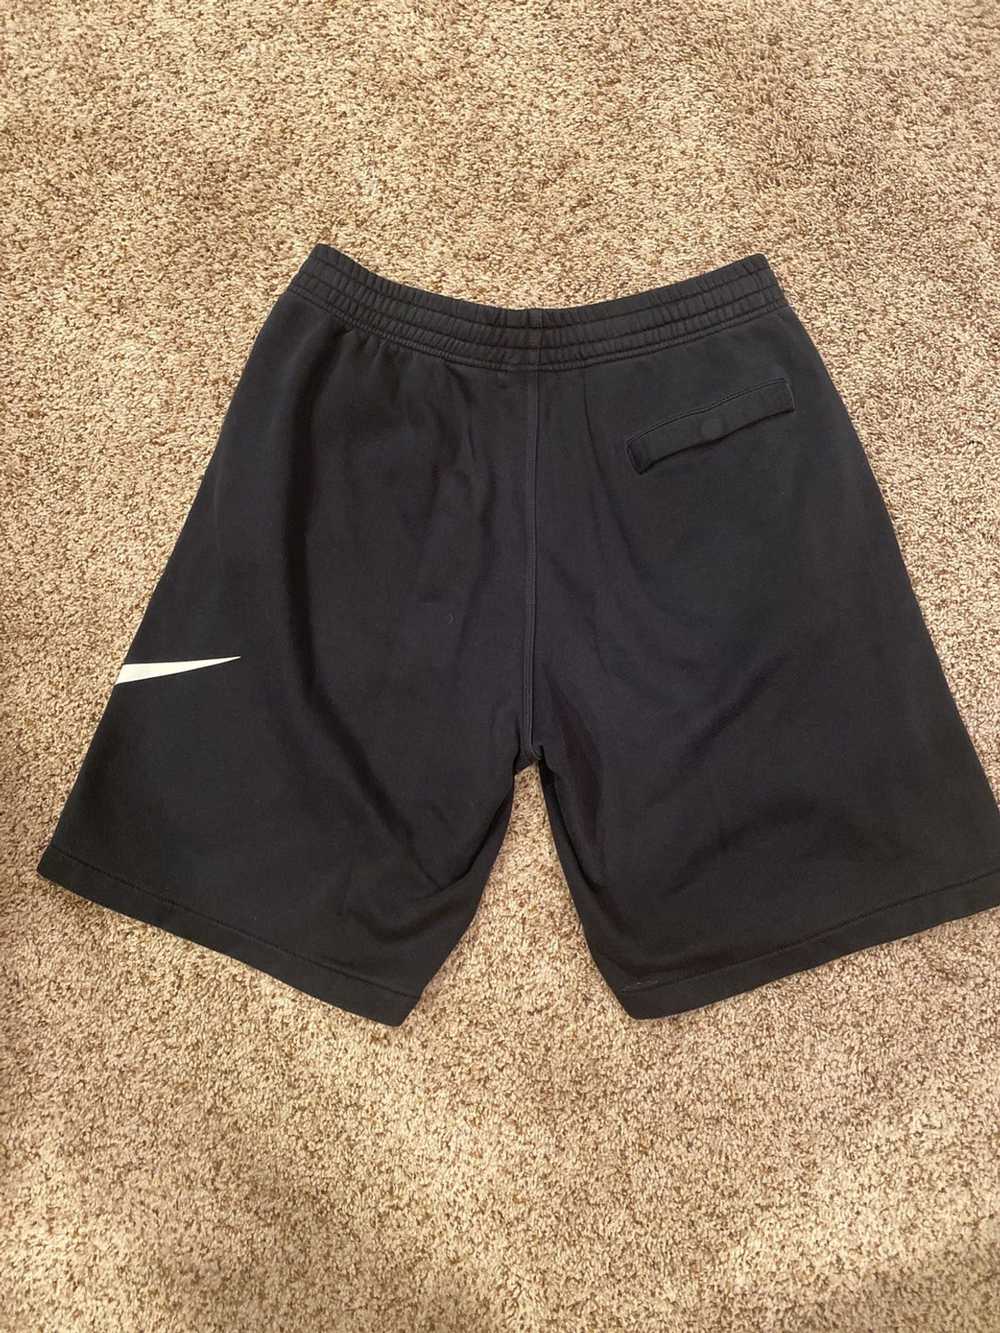 Nike Black Nike Fleece Shorts Lg - image 2